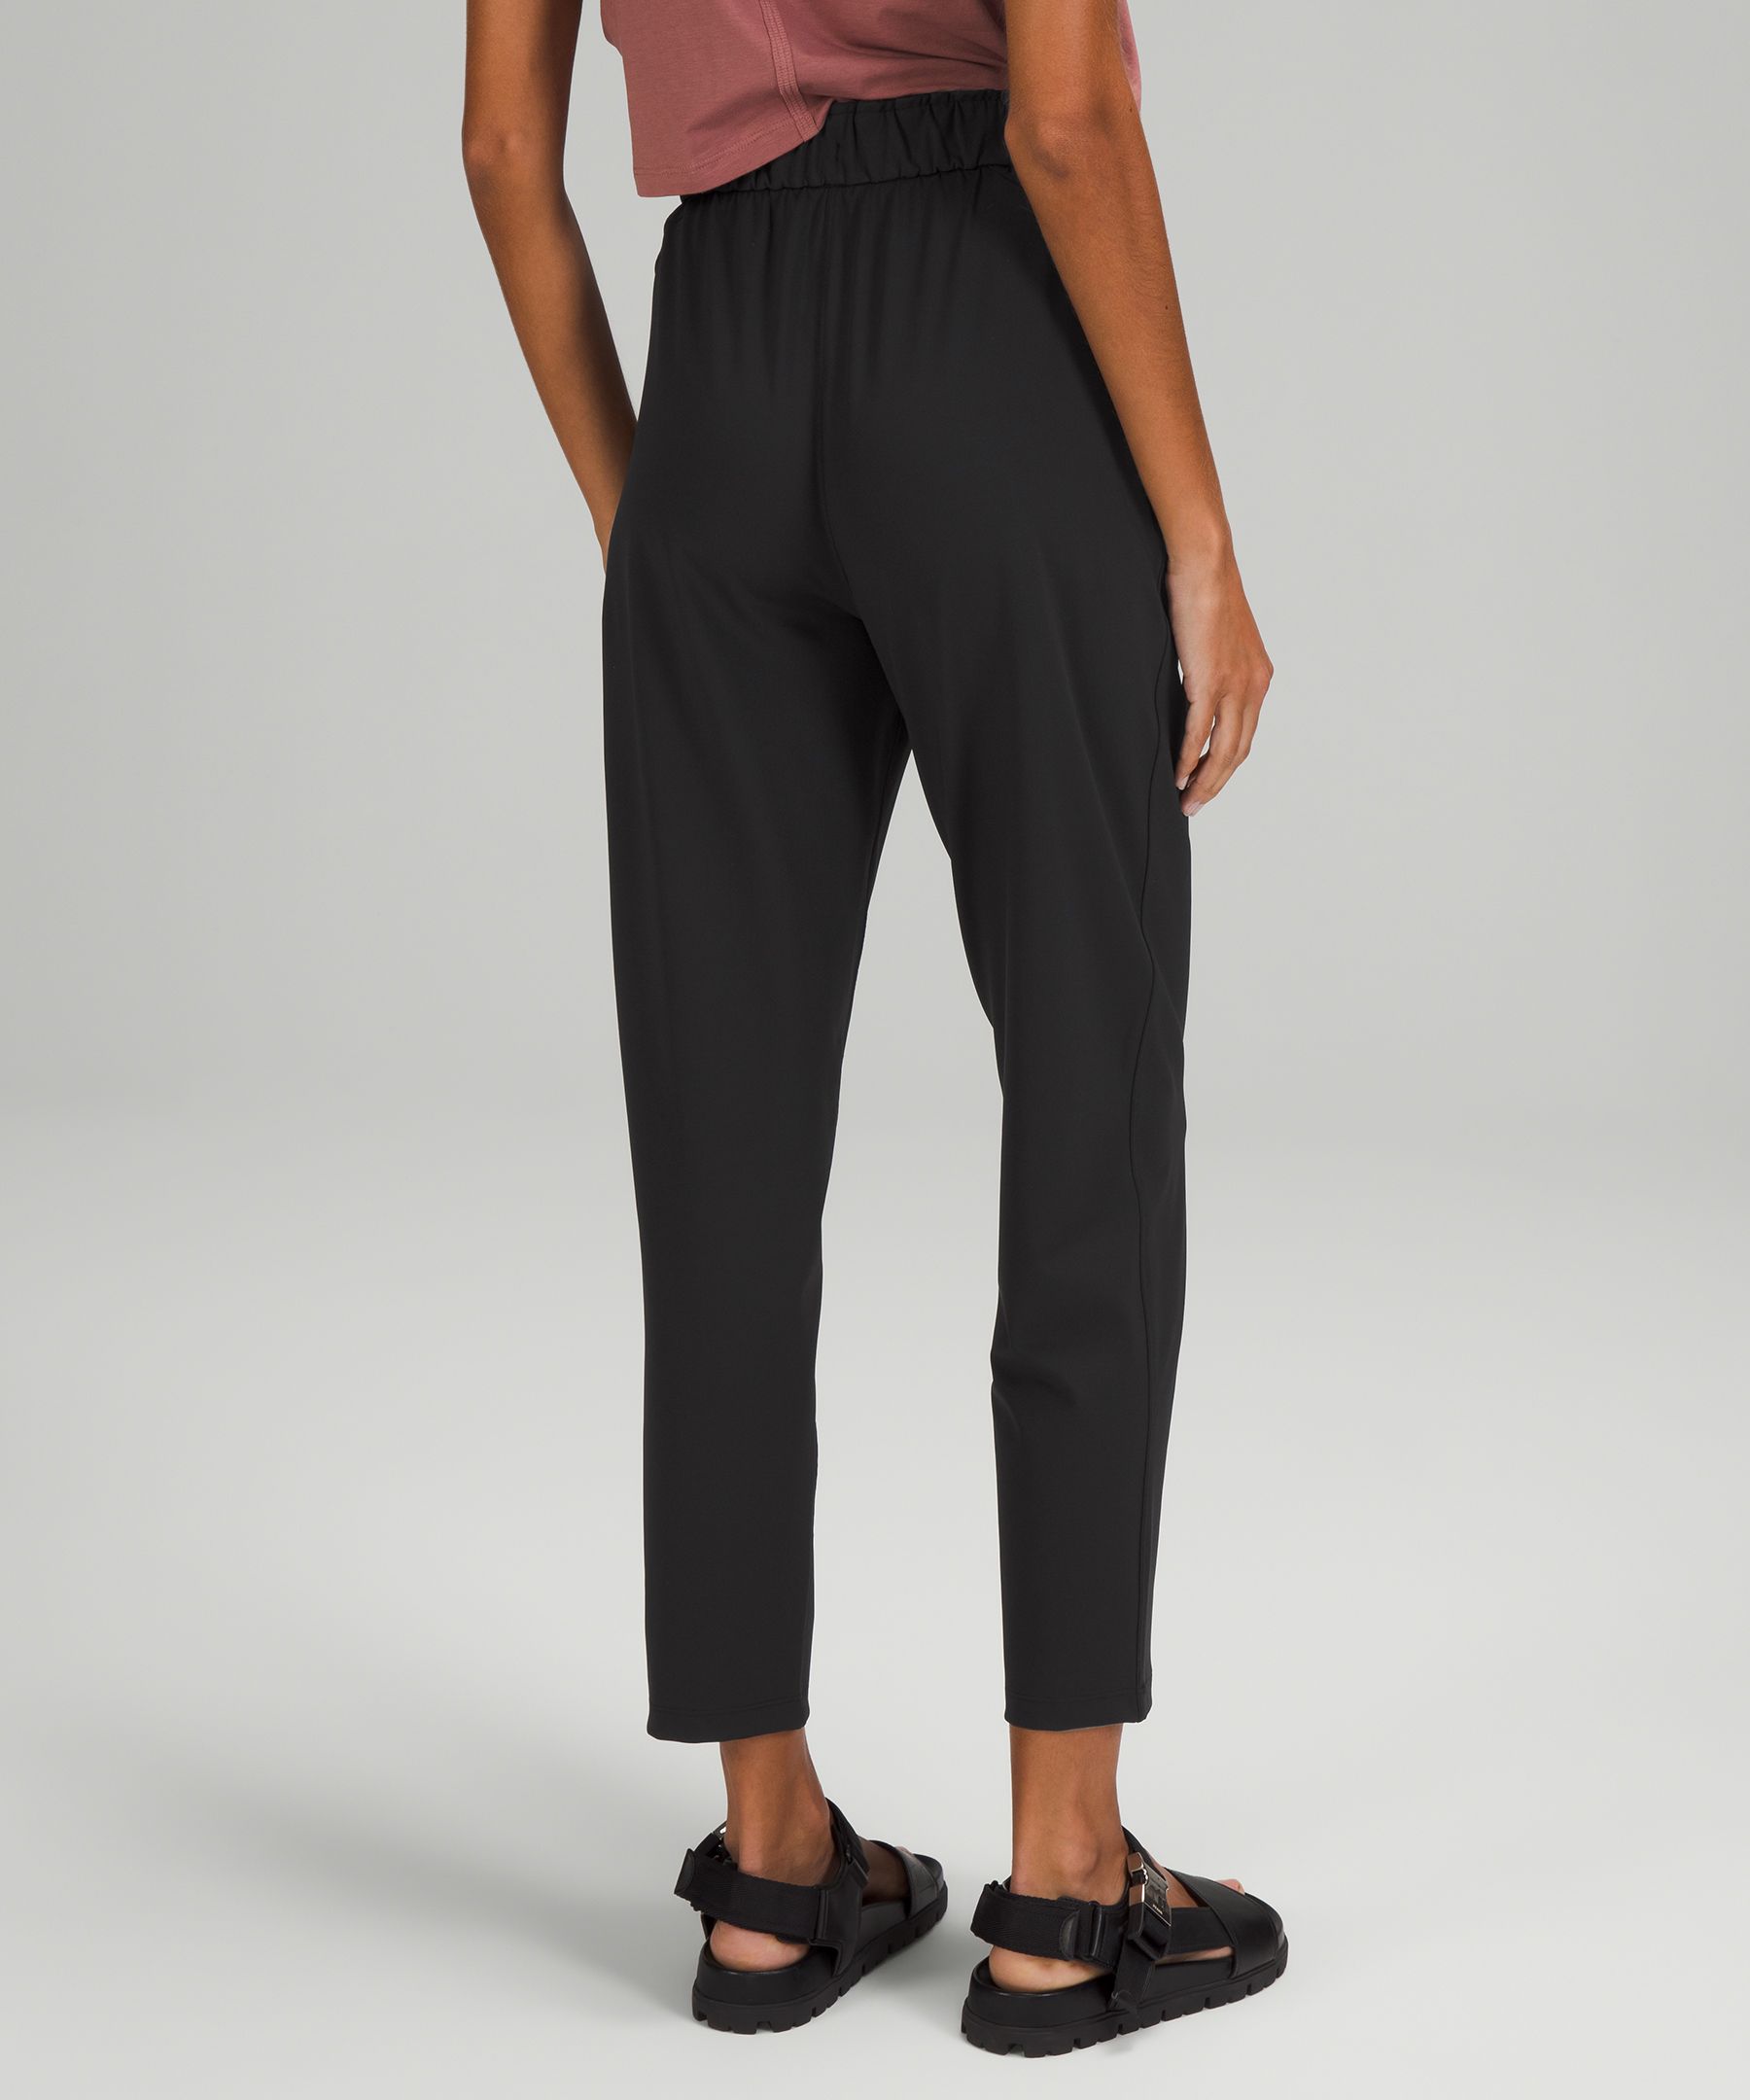 Lululemon Stretch High-rise Pants 7/8 Length In Black